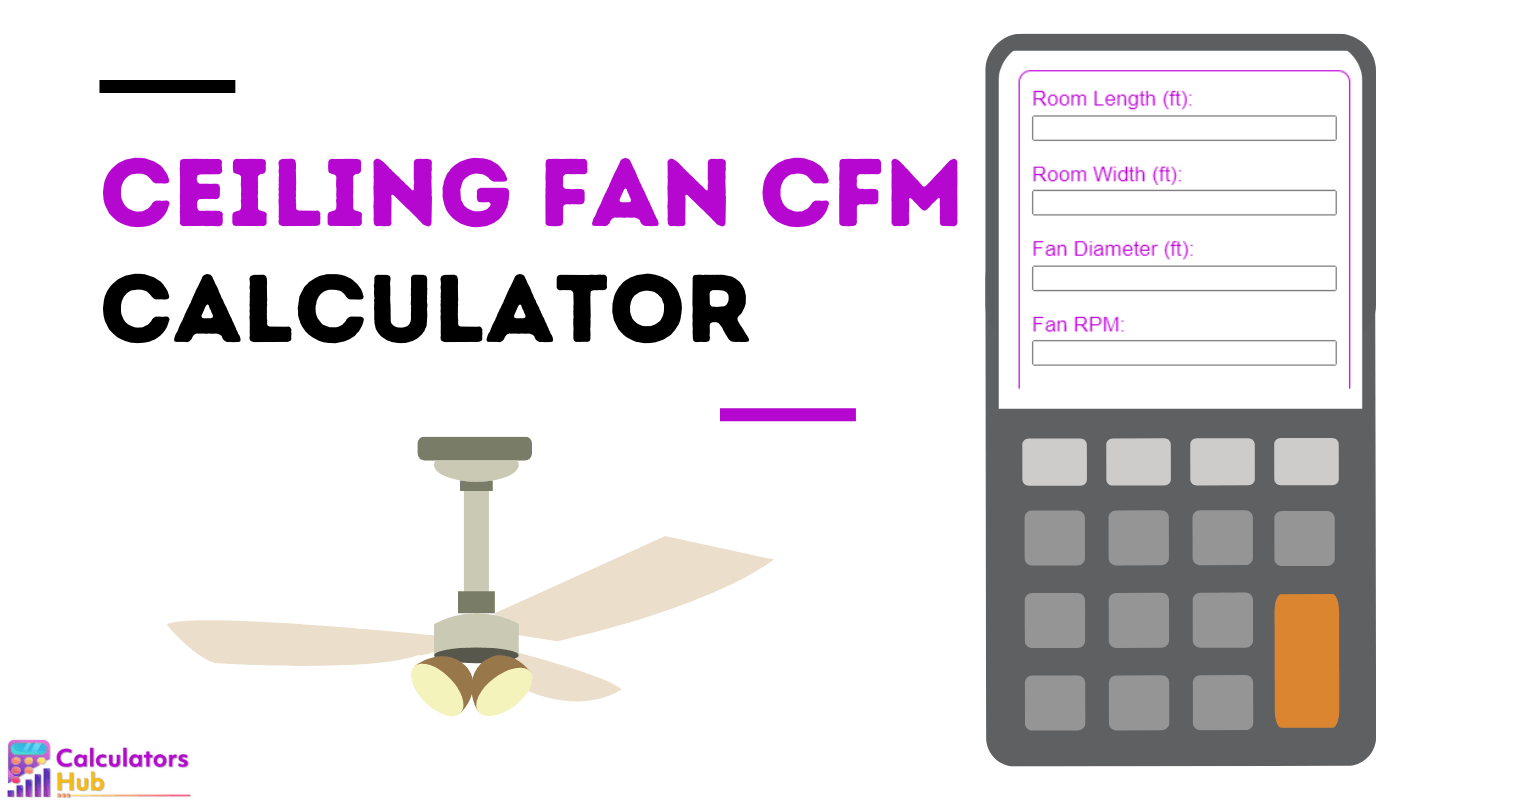 Ceiling Fan CFM Calculator